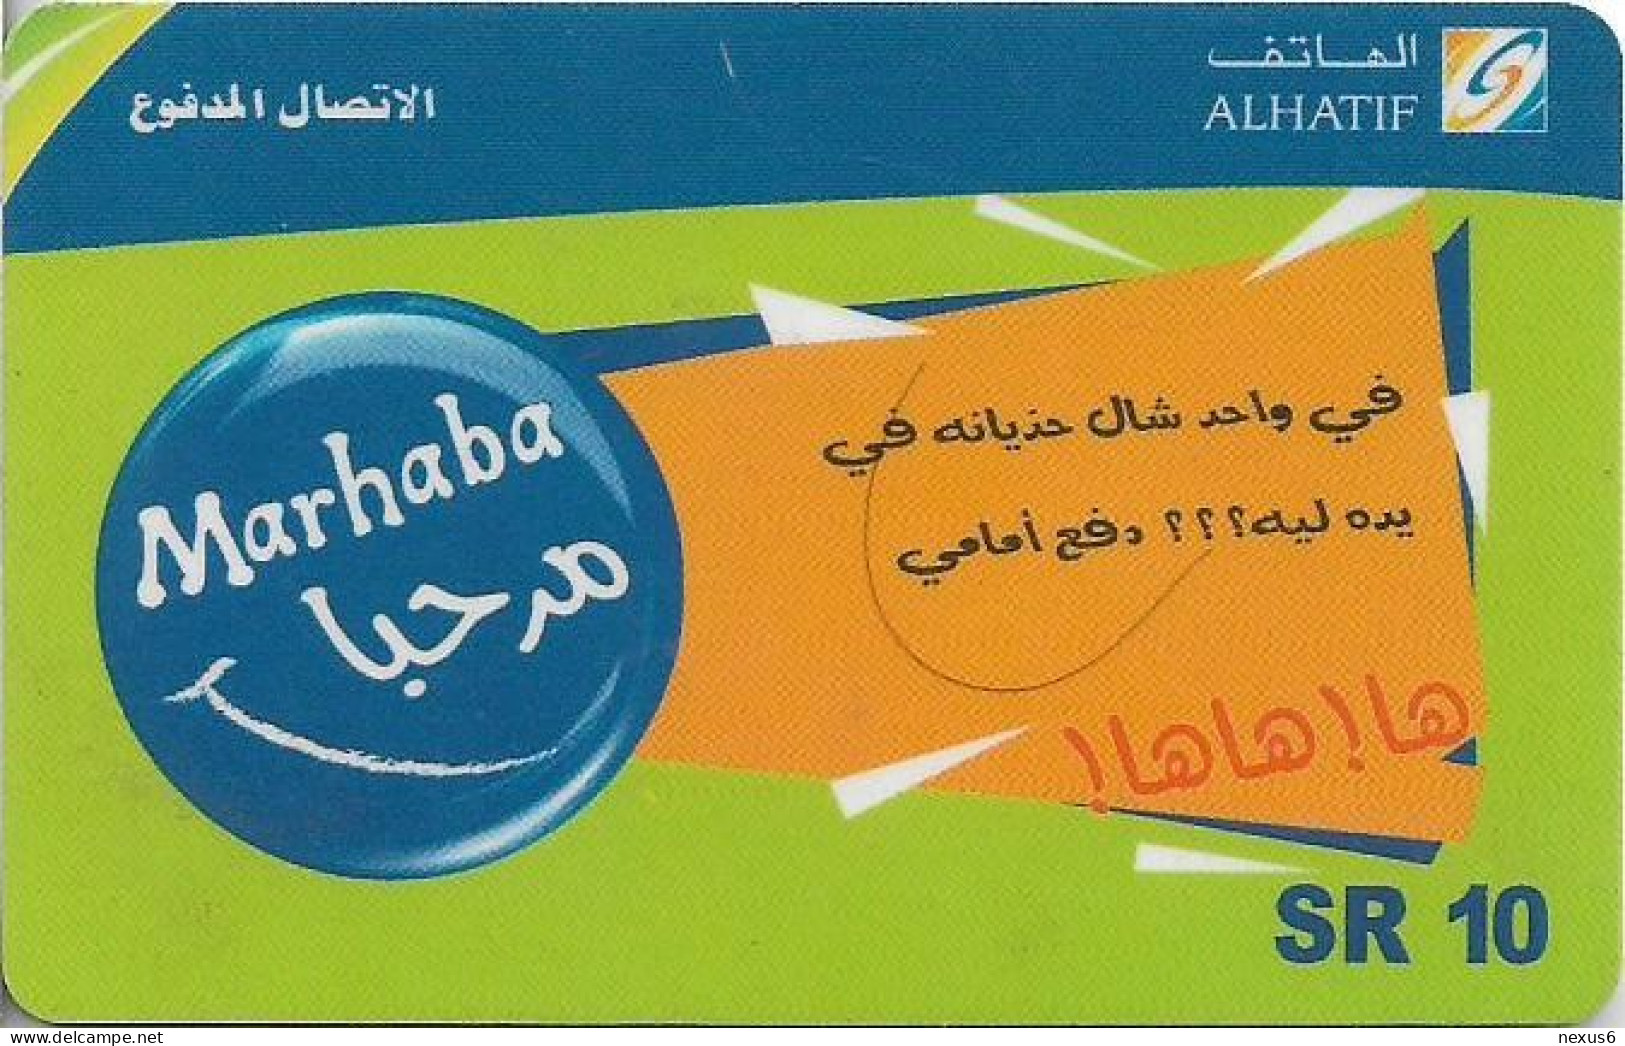 Saudi Arabia - S.T.C - Alhatif, Marhaba, 06.2003, Remote Mem. 10SR, Used - Arabie Saoudite